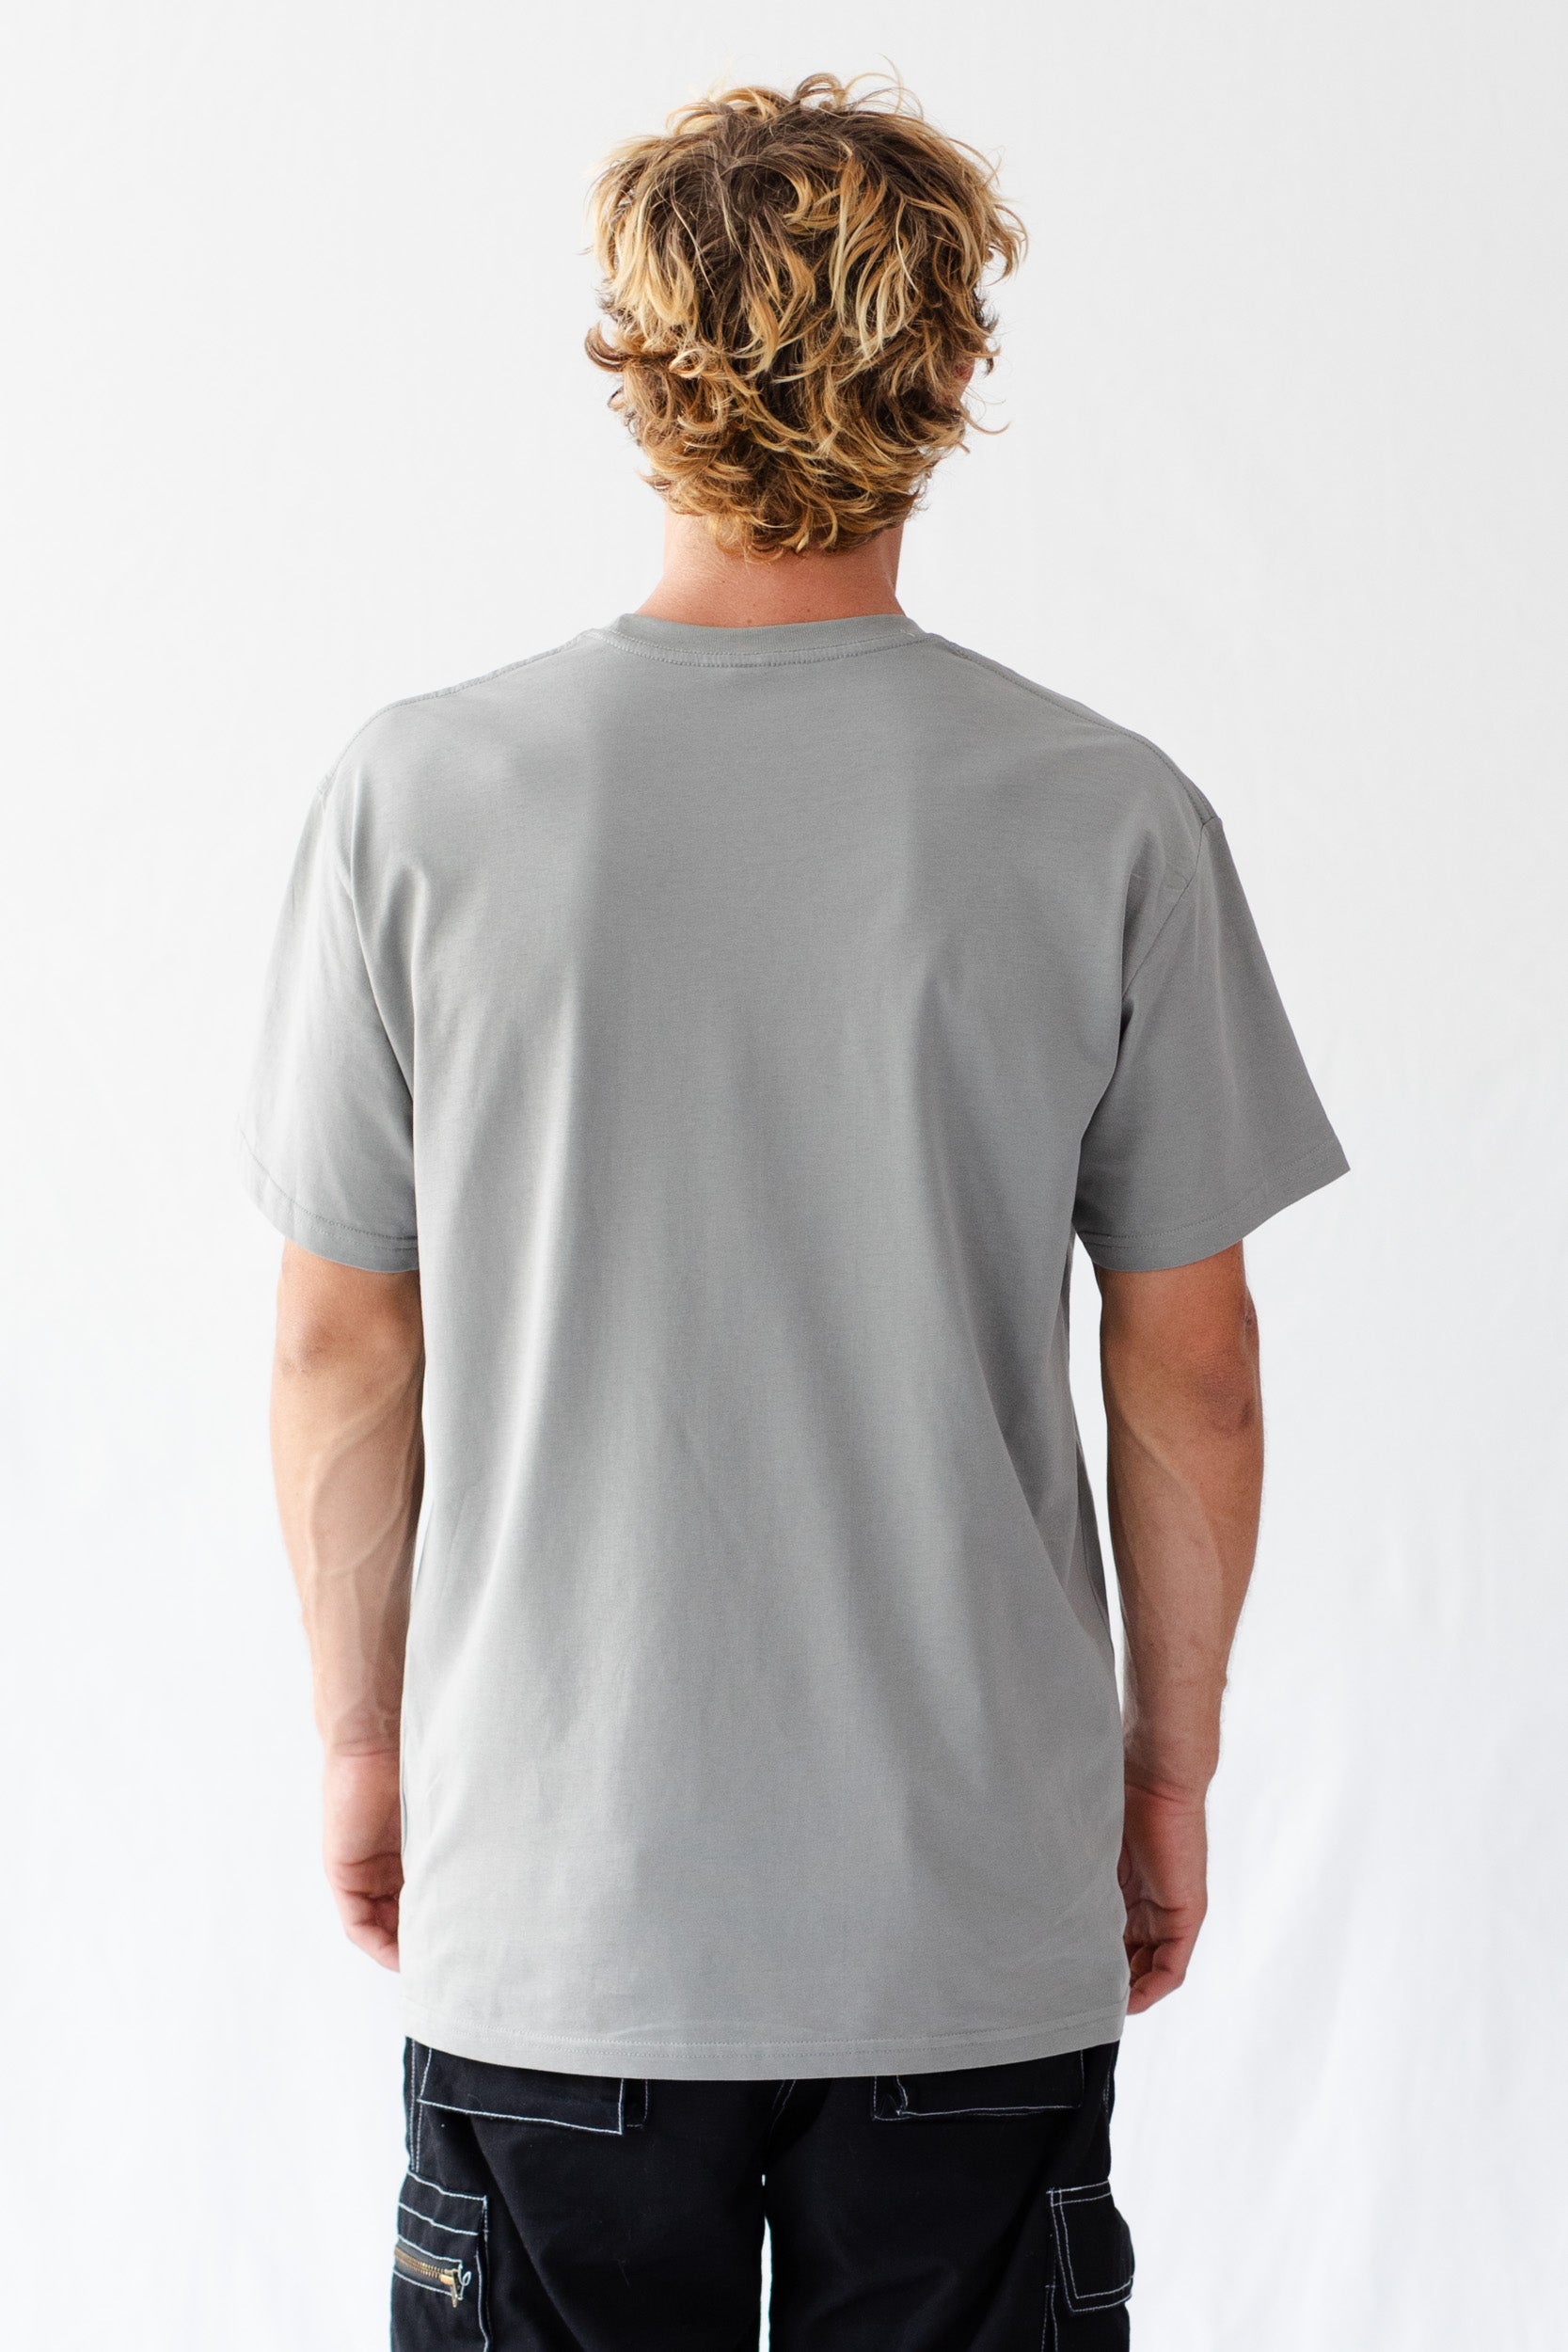 Camo Mens ENERGY T-Shirt - Granite